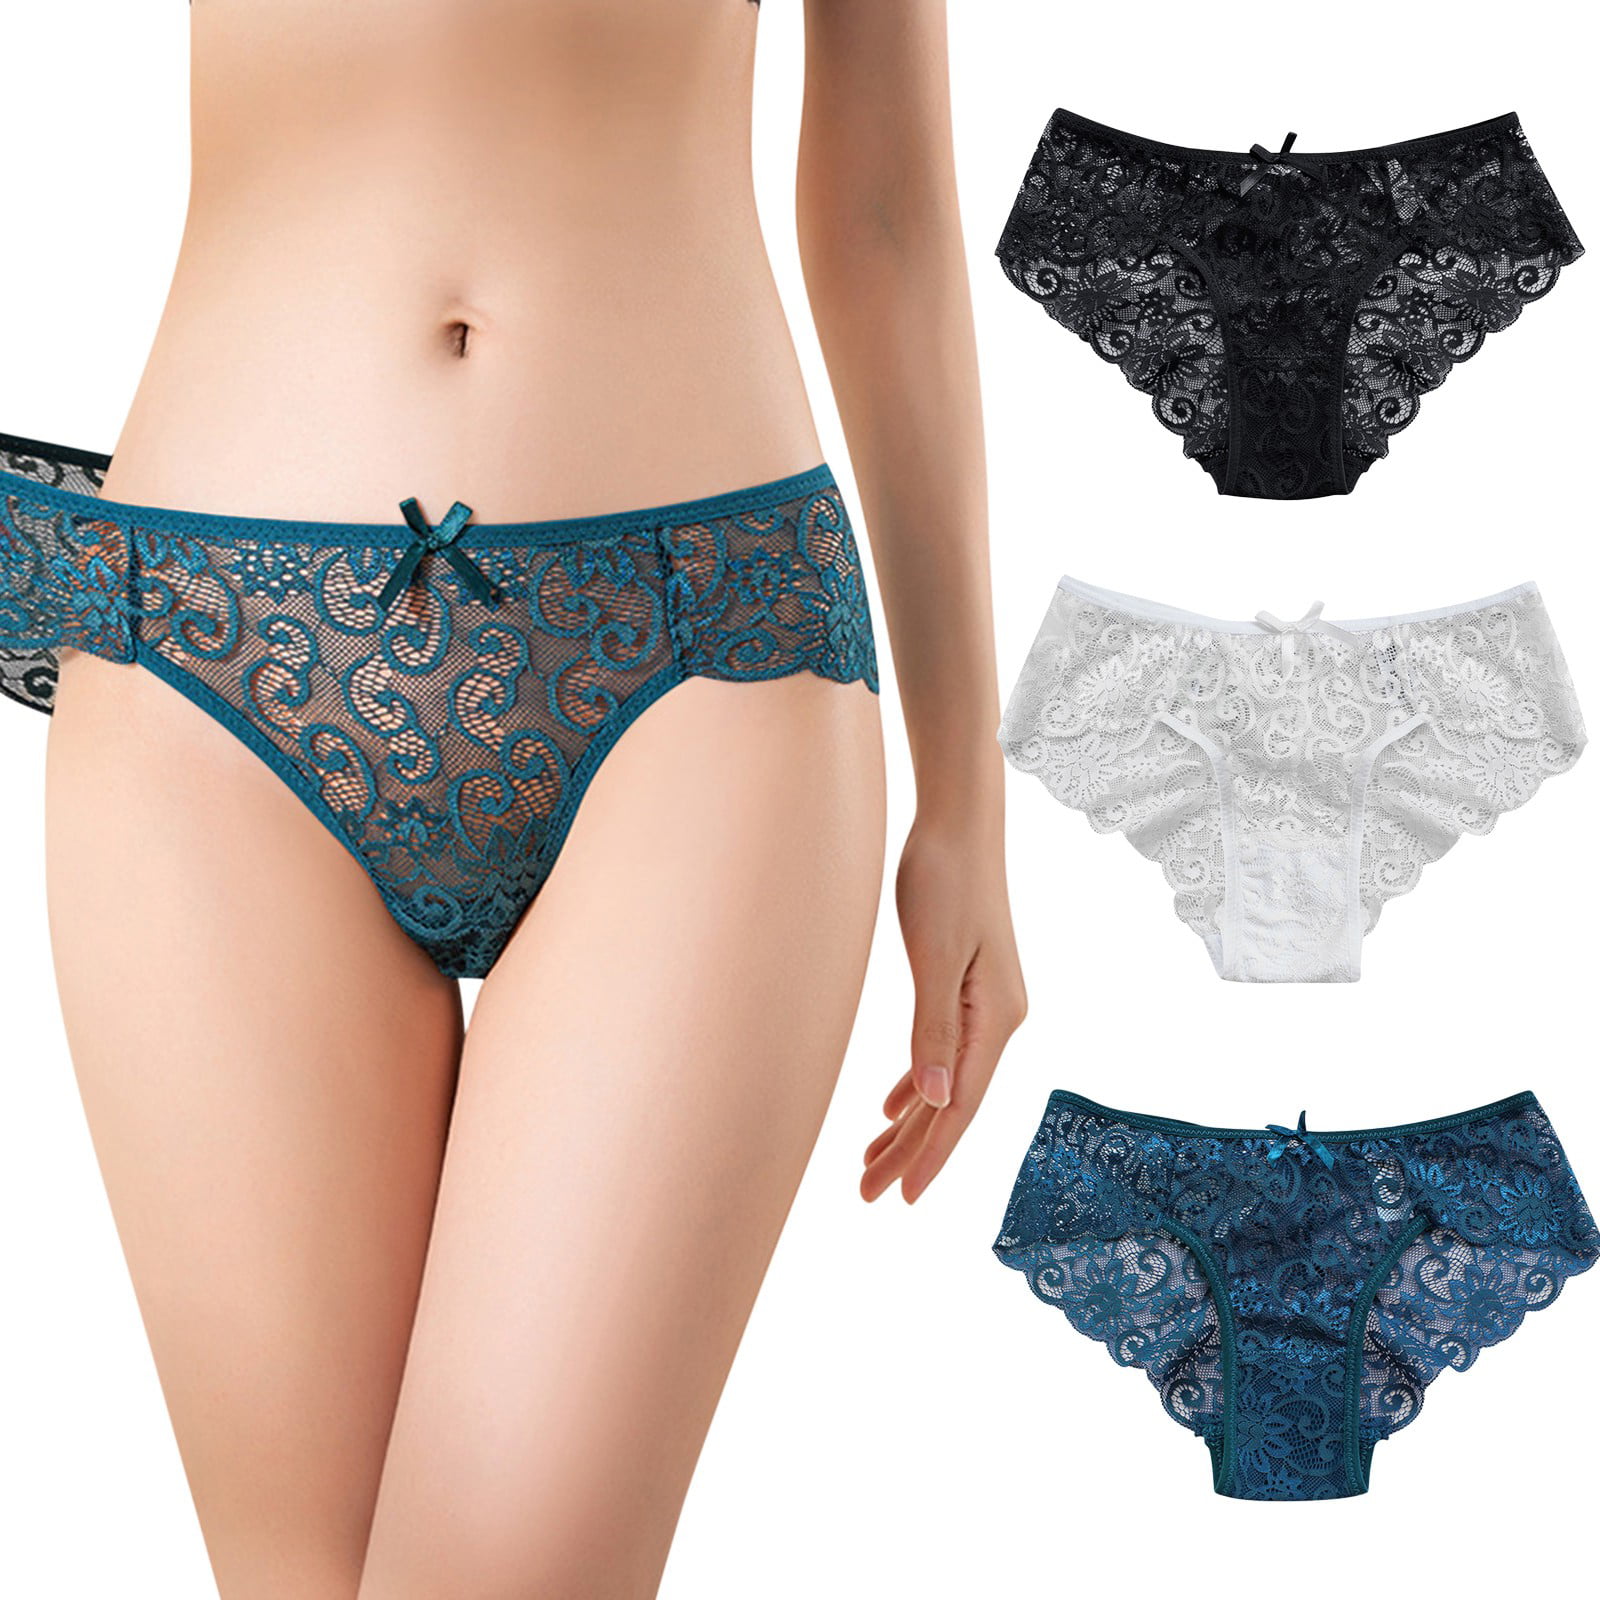 Zuwimk Thongs For Women ,Womens Black Lace Thong Panties 6-Pack Cute Lingerie  Underwear Multicolor,XL 